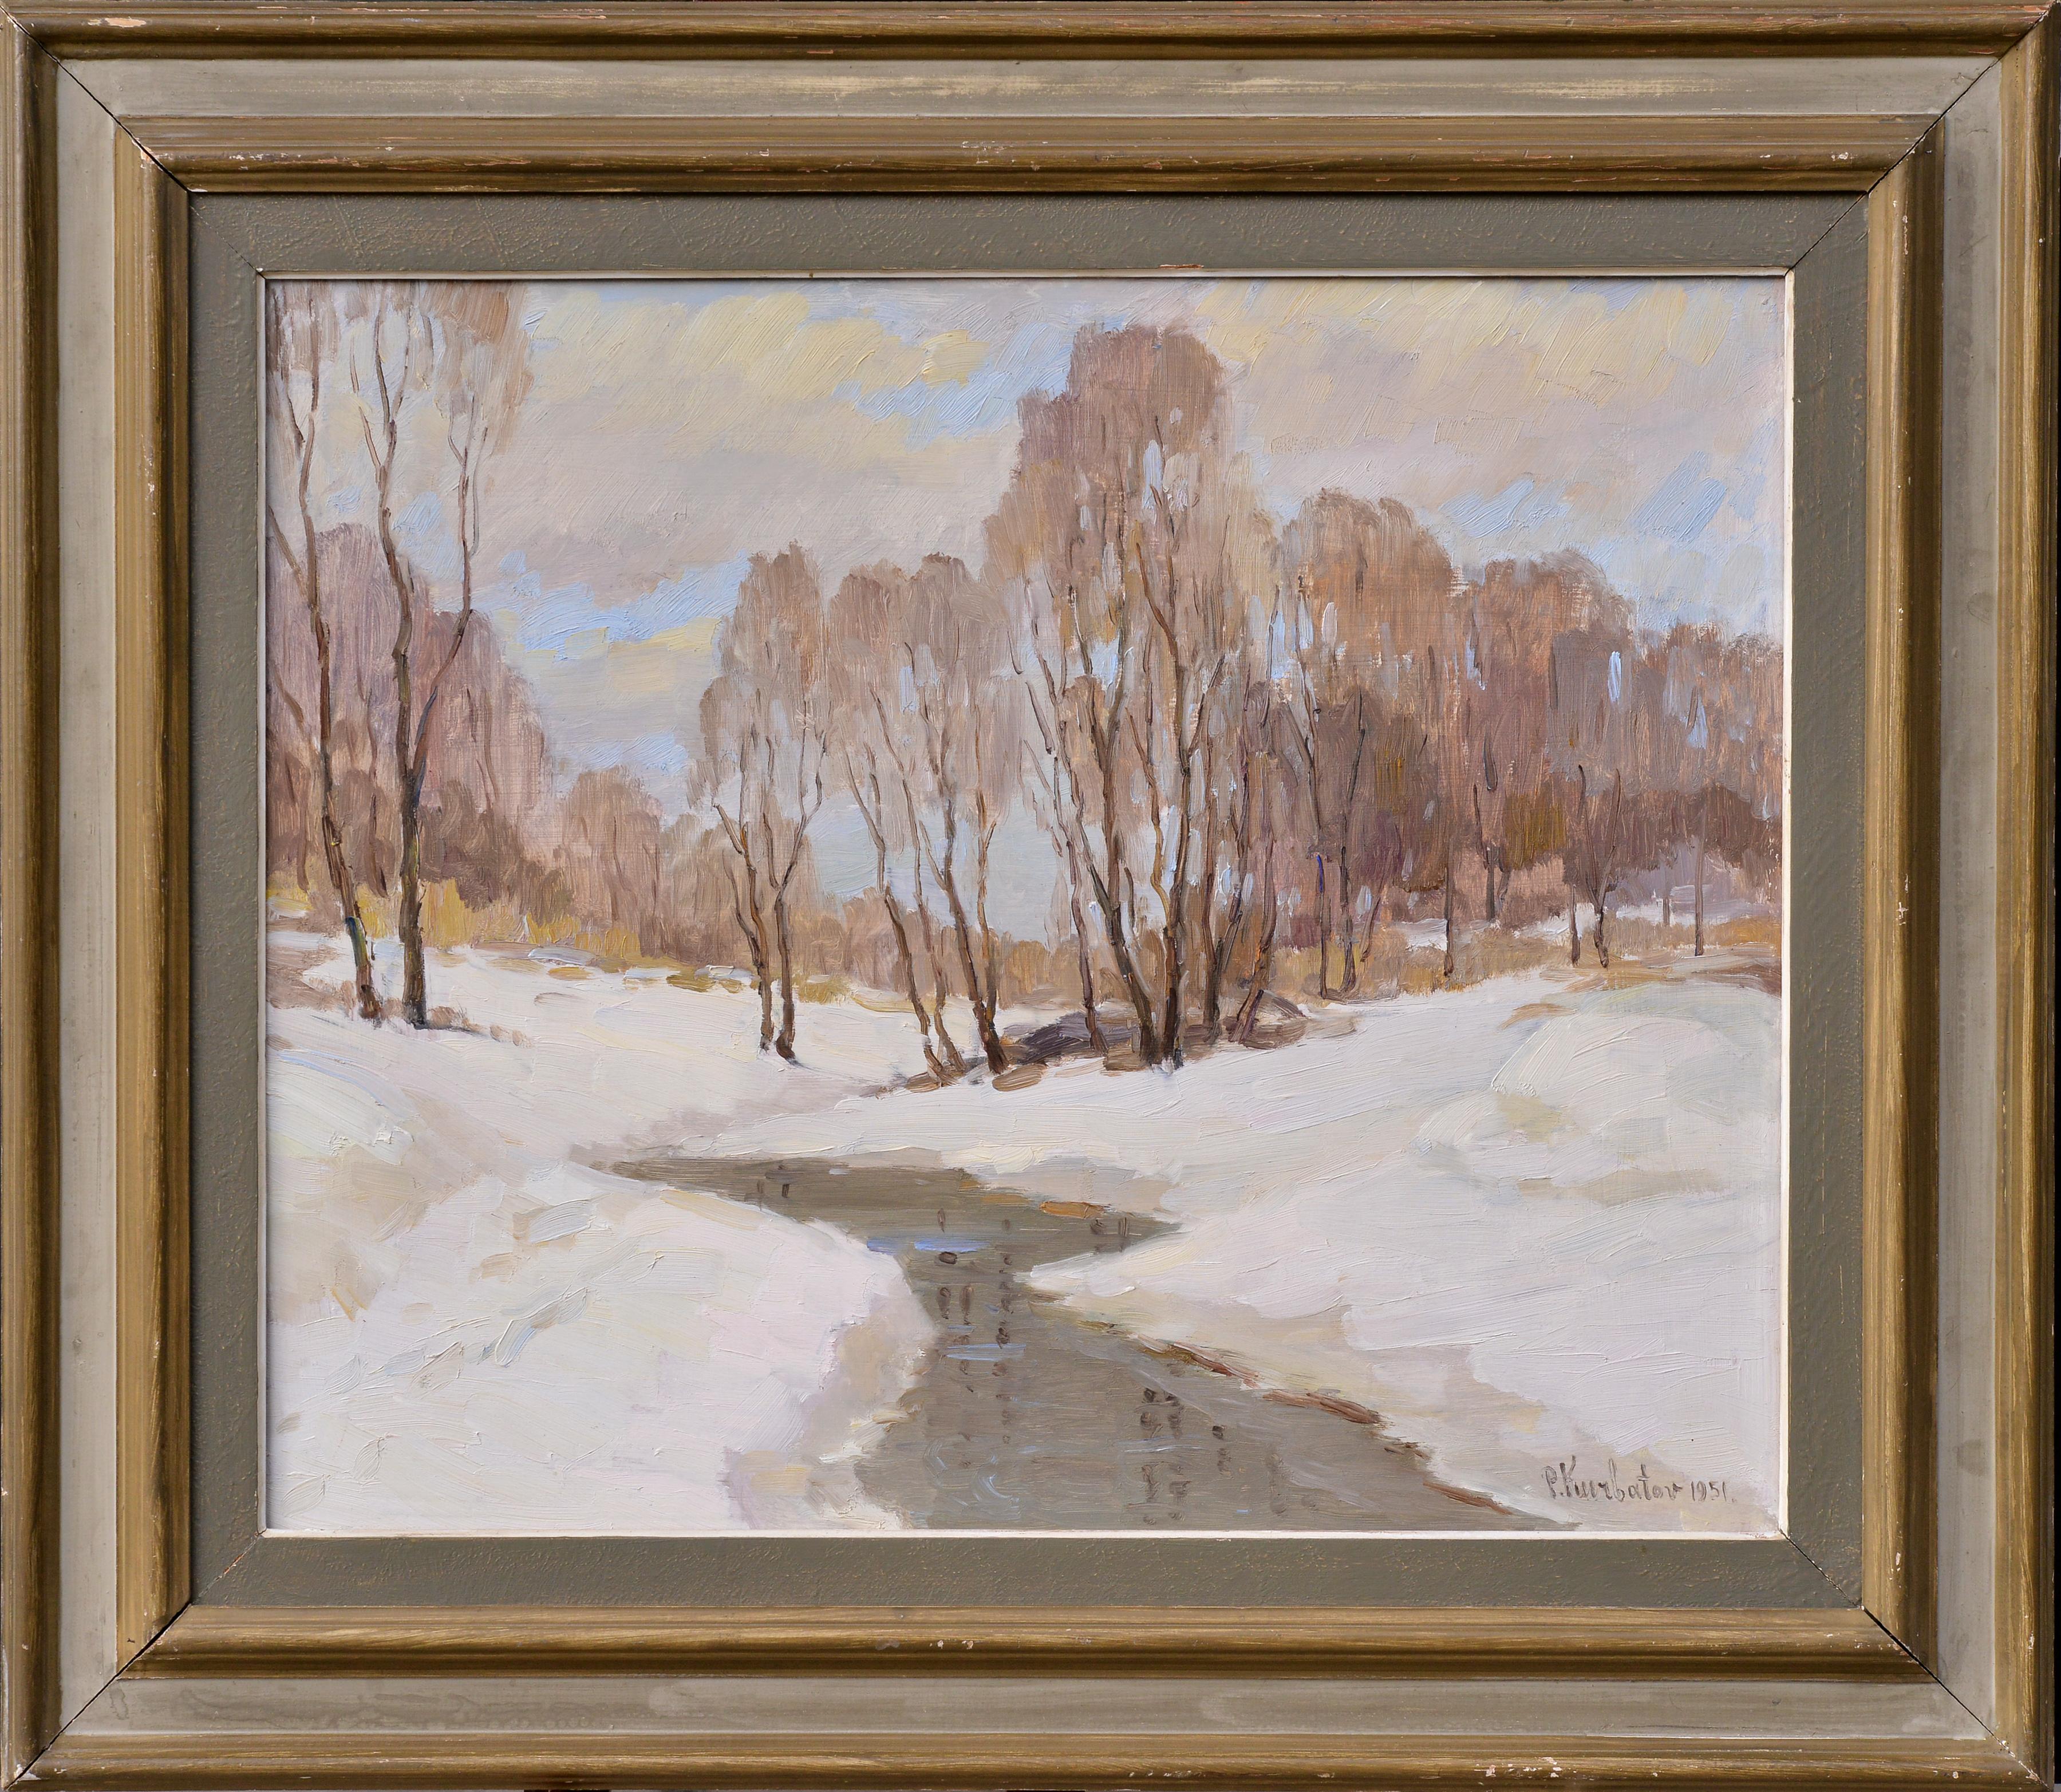 Peter Kurbatov Landscape Painting - American Winter Landscape 1951 Vintage Oil Painting by Impressionist Master